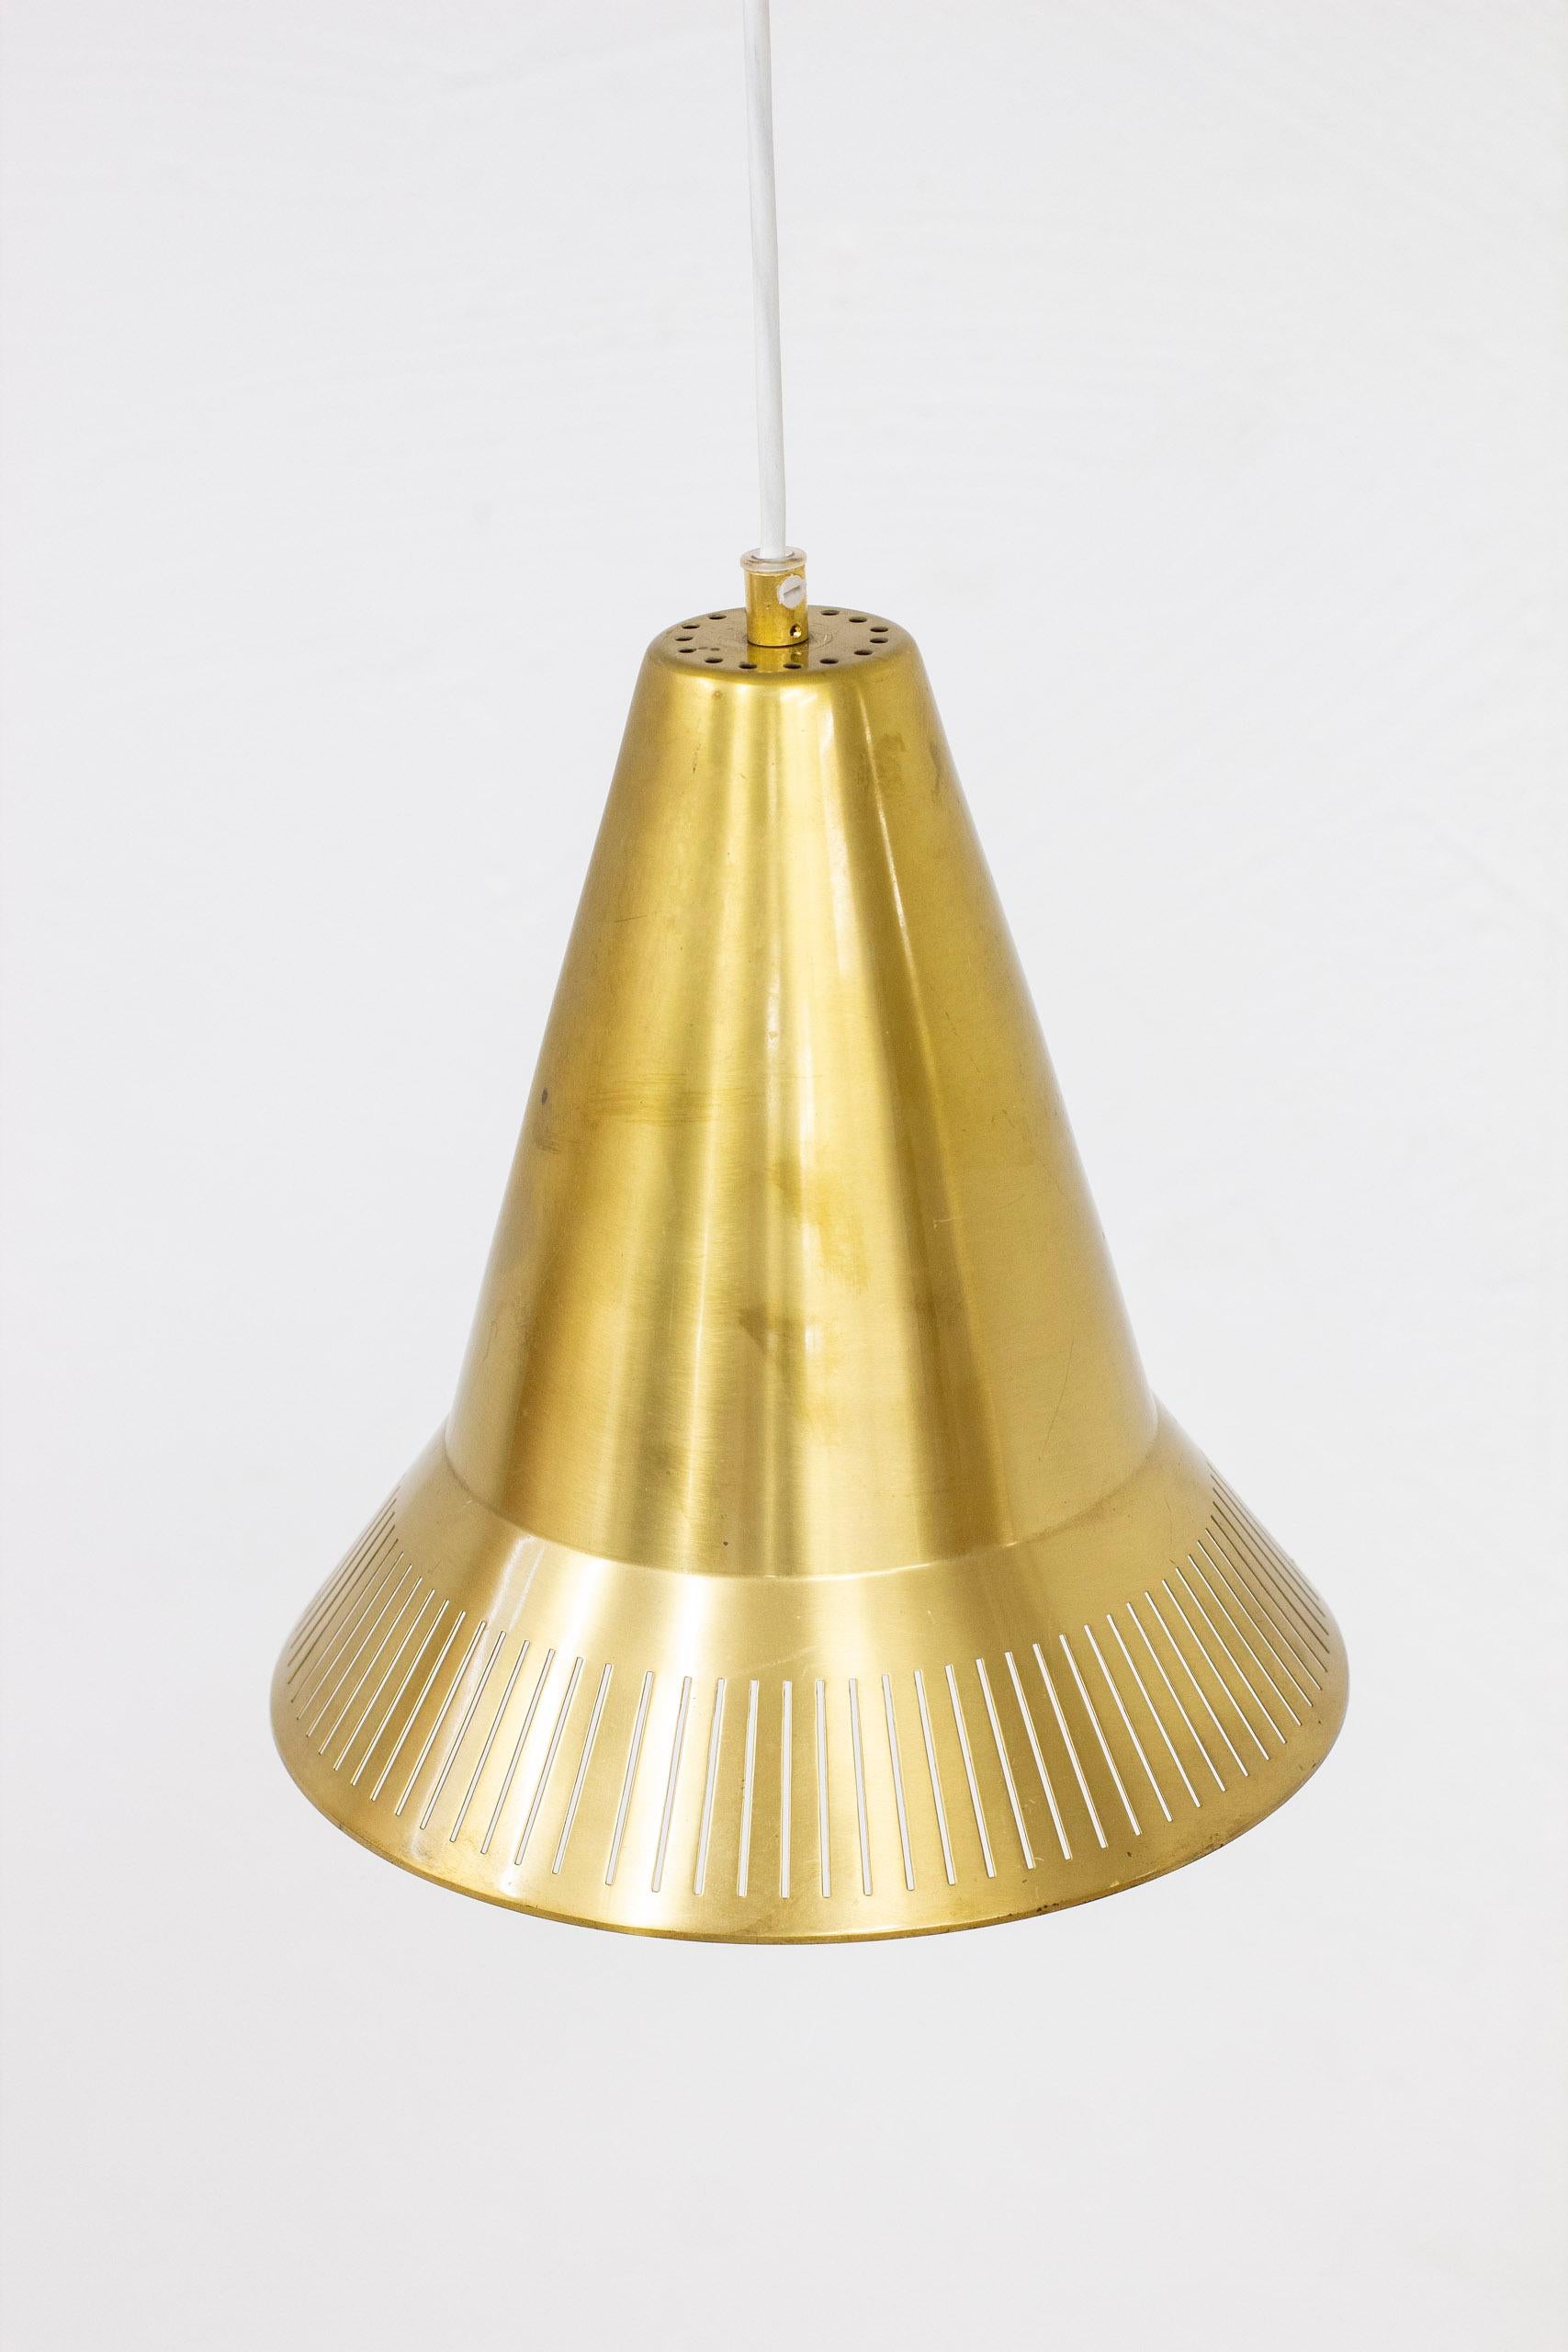 Teak Brass Pendant Lamp Designed by Hans Bergström for Ateljé Lyktan